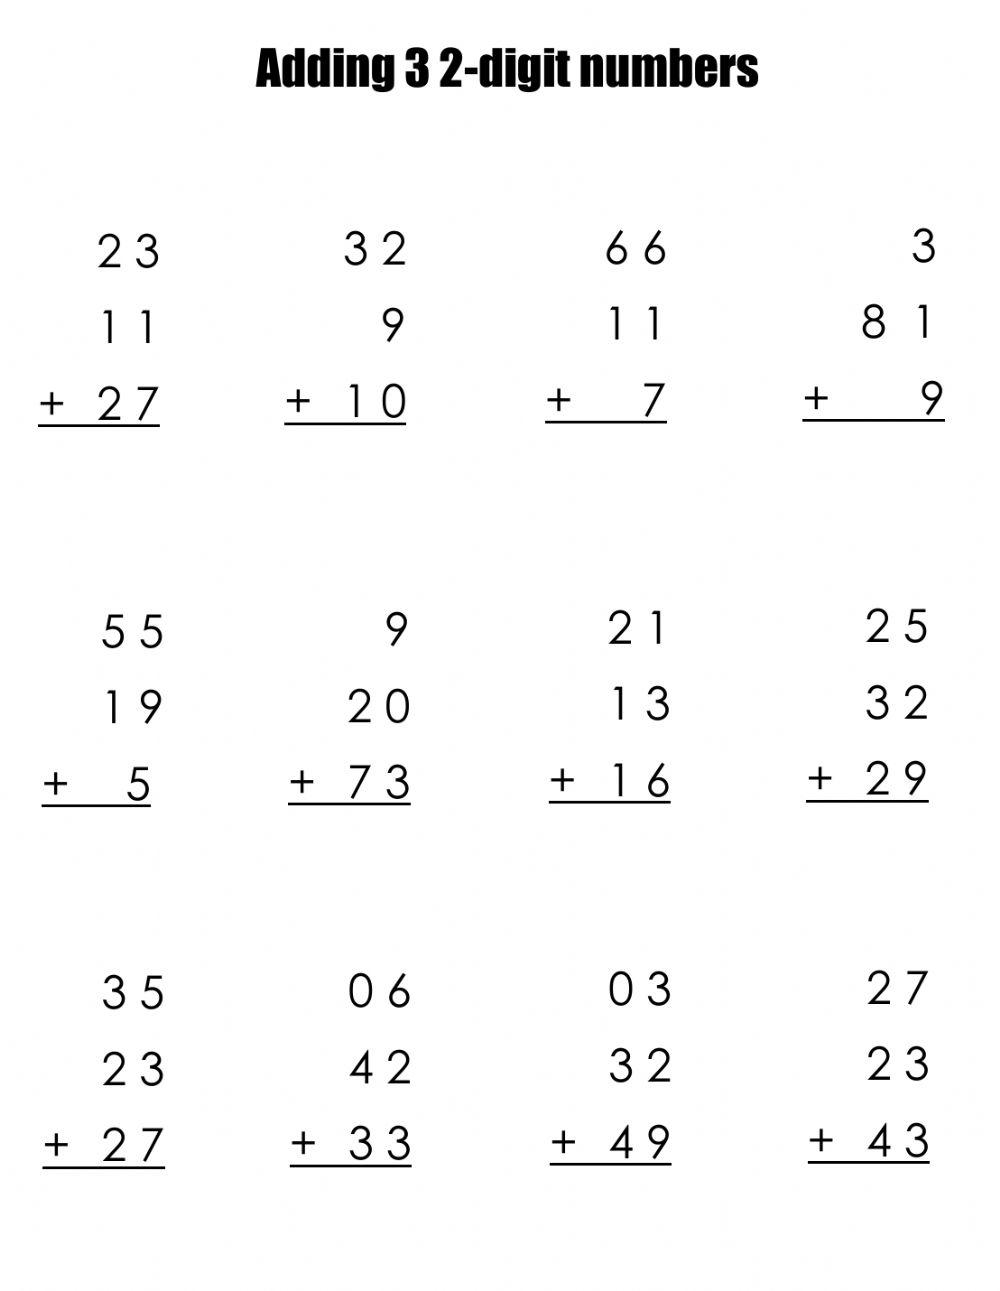 Adding 3 2-digit numbers